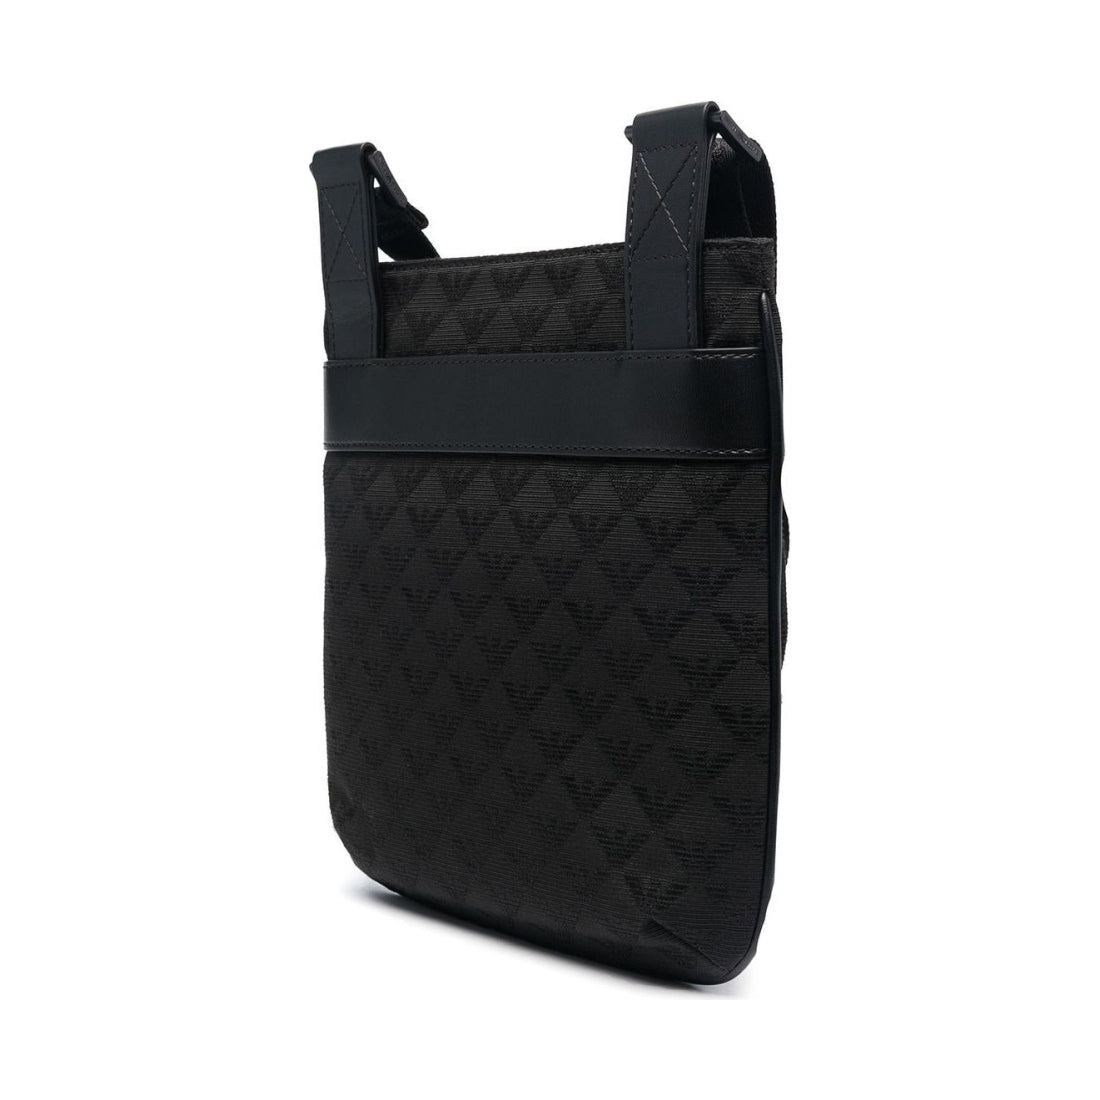 Emporio Armani mens black, black, black casual messenger bag | Vilbury London